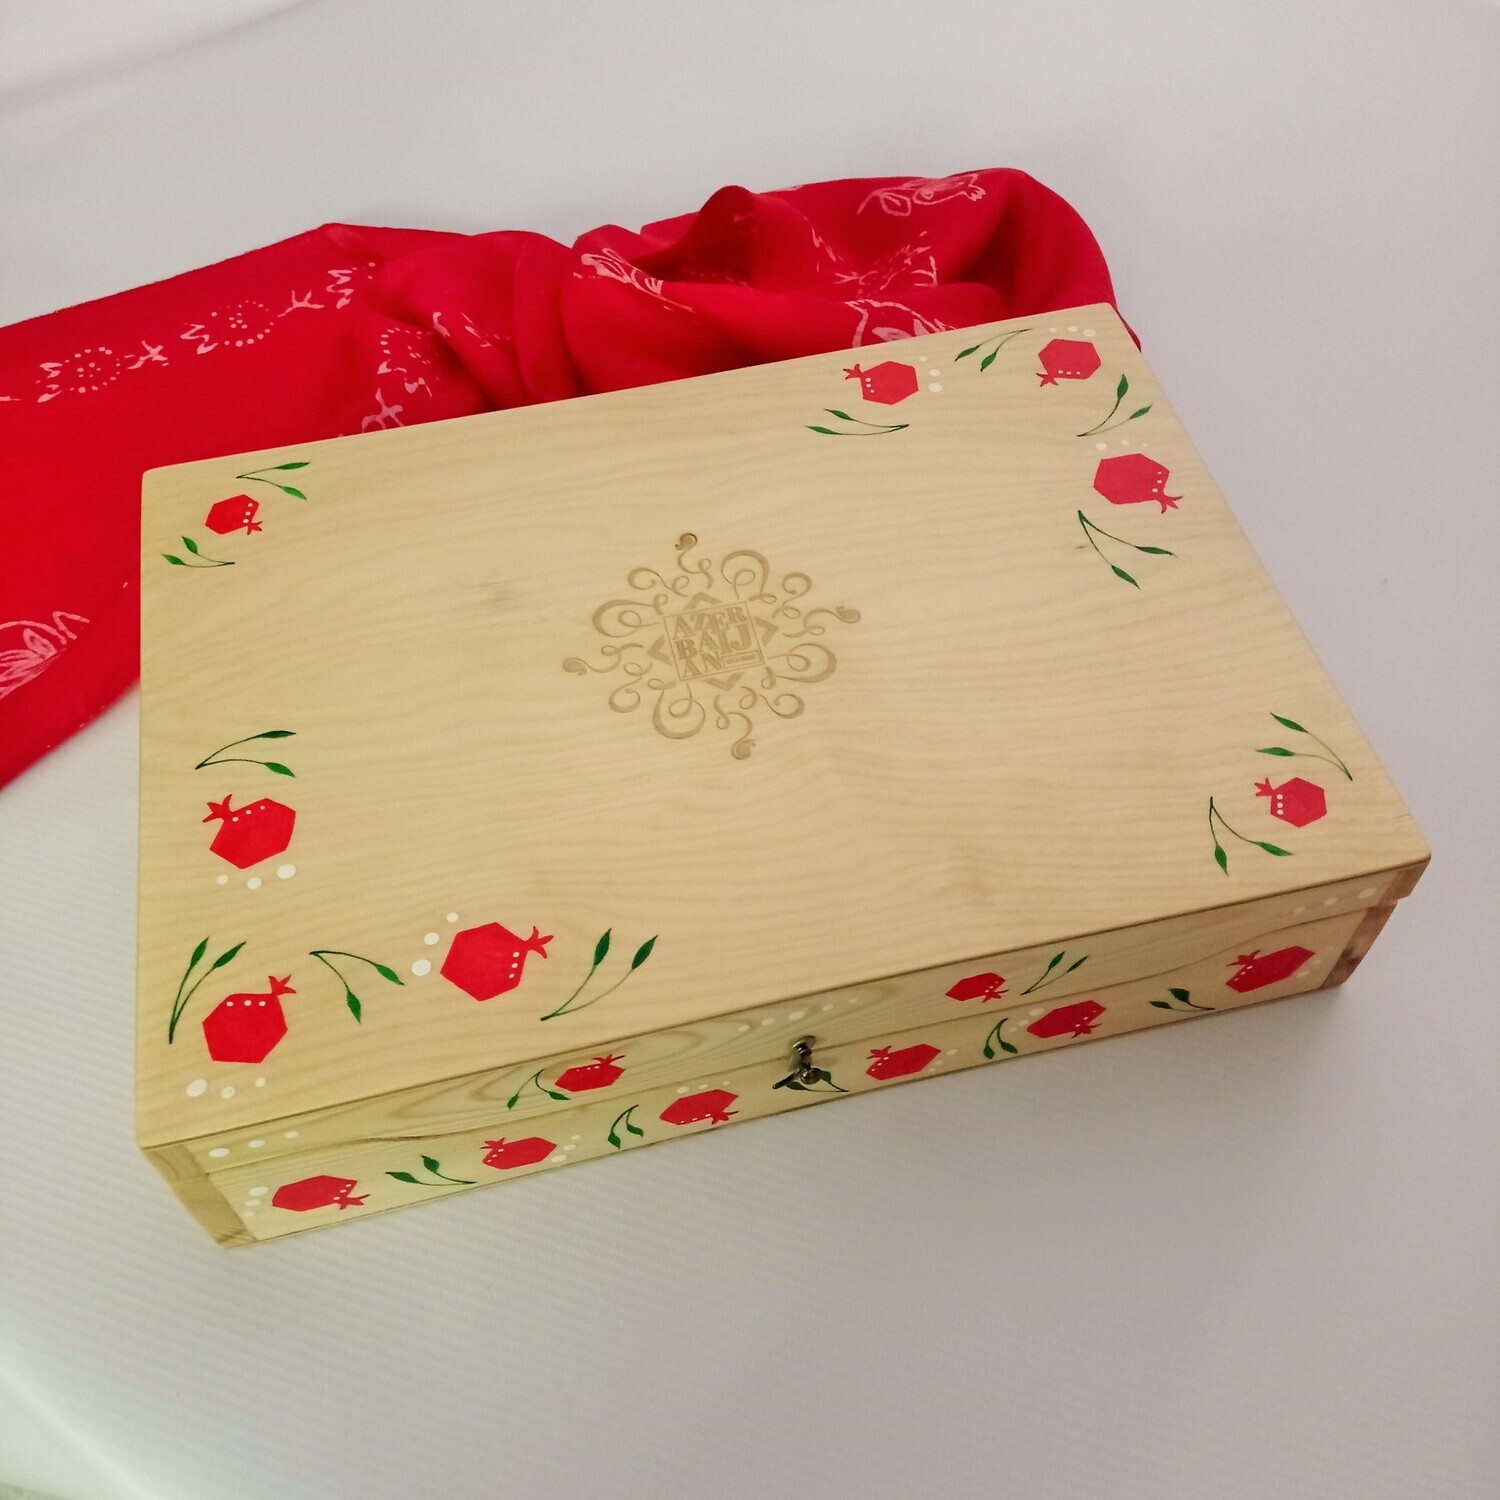 Luxury Tea Set in a Wood Box